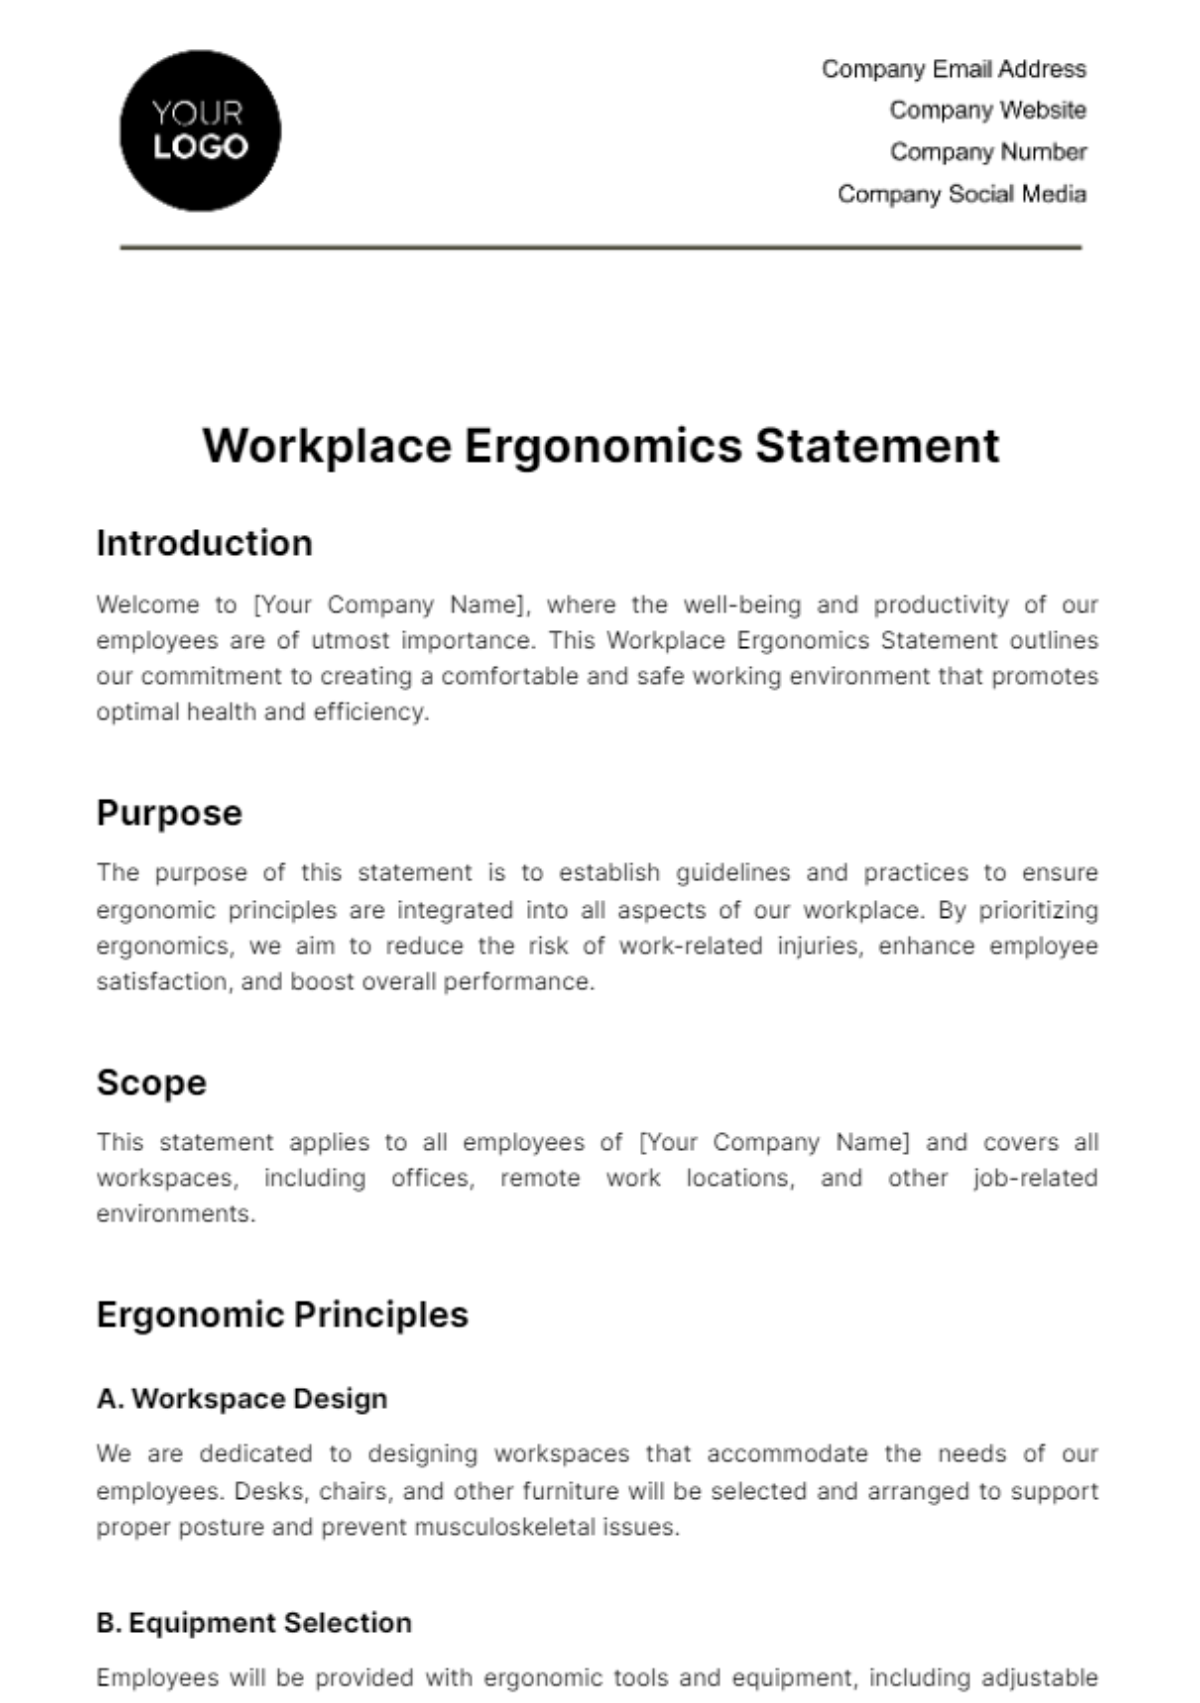 Free Workplace Ergonomics Statement Template